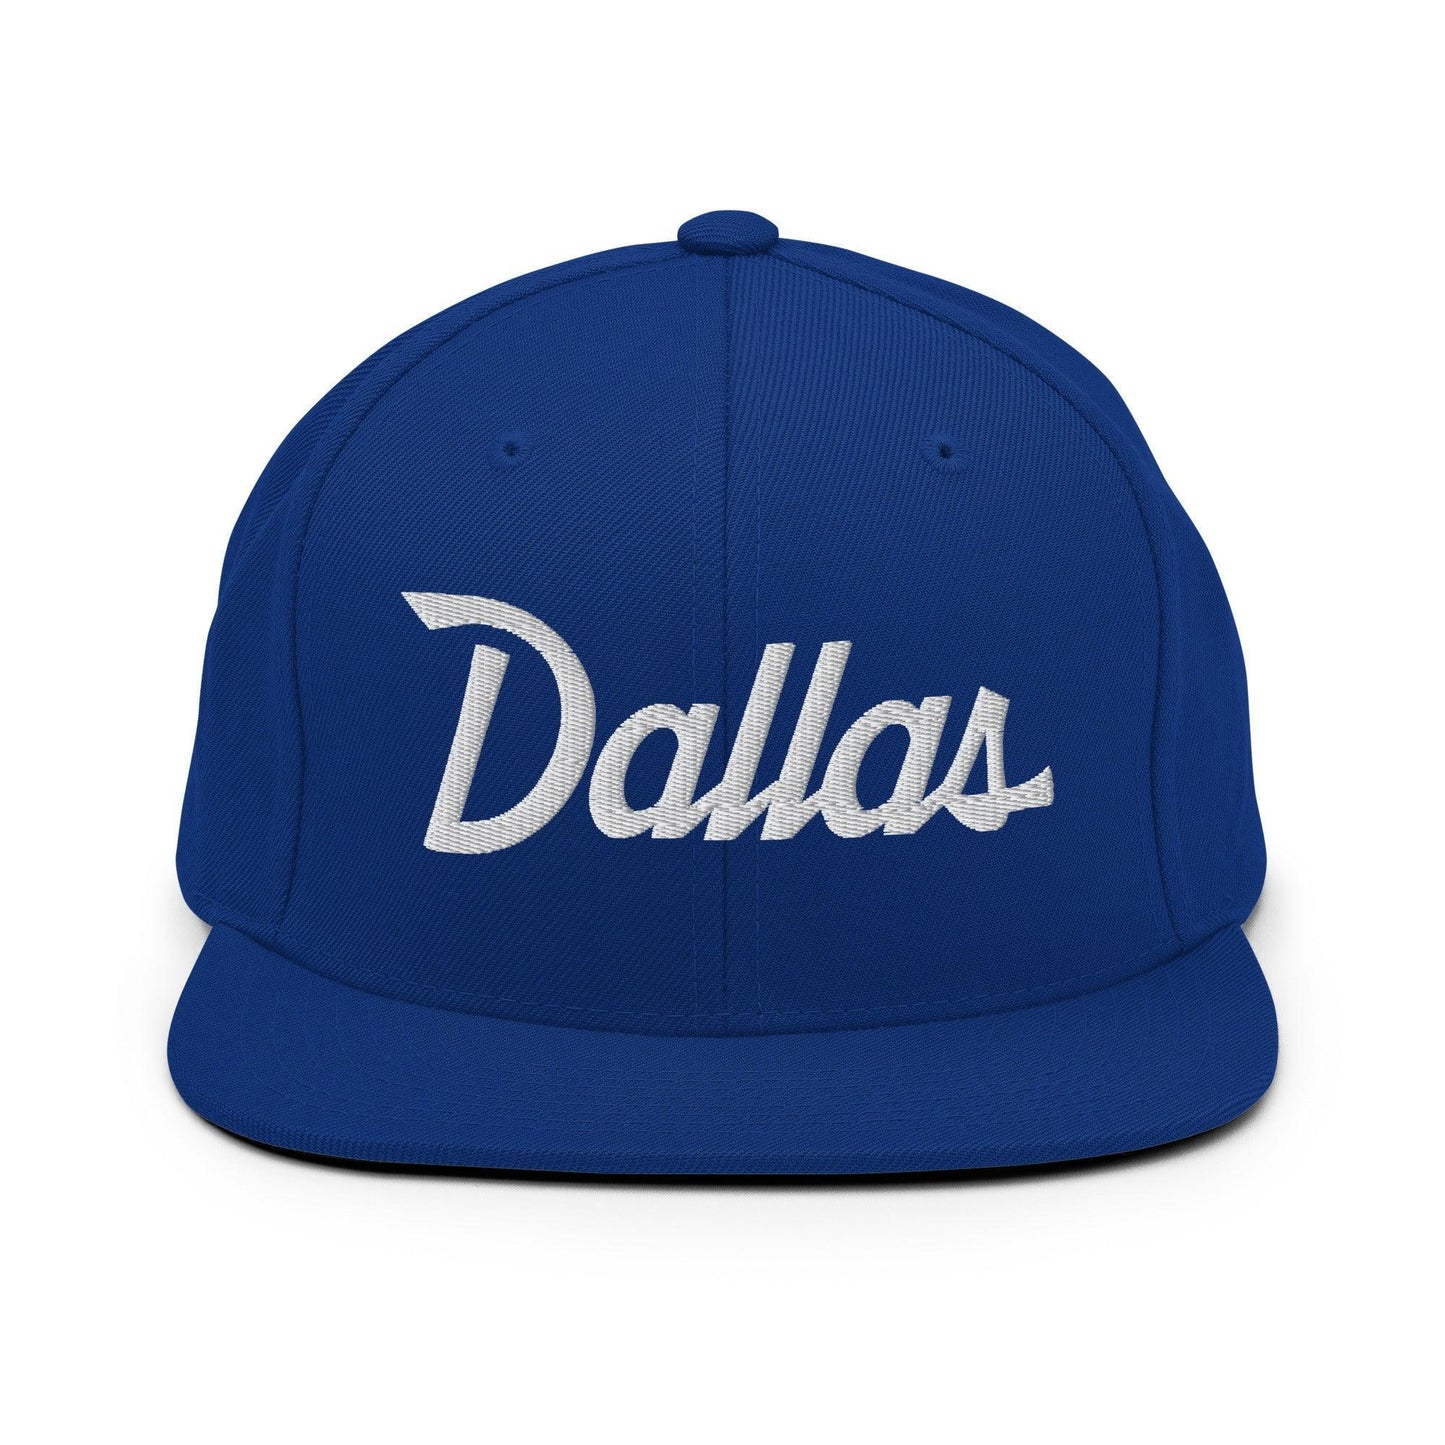 Dallas Script Snapback Hat Royal Blue